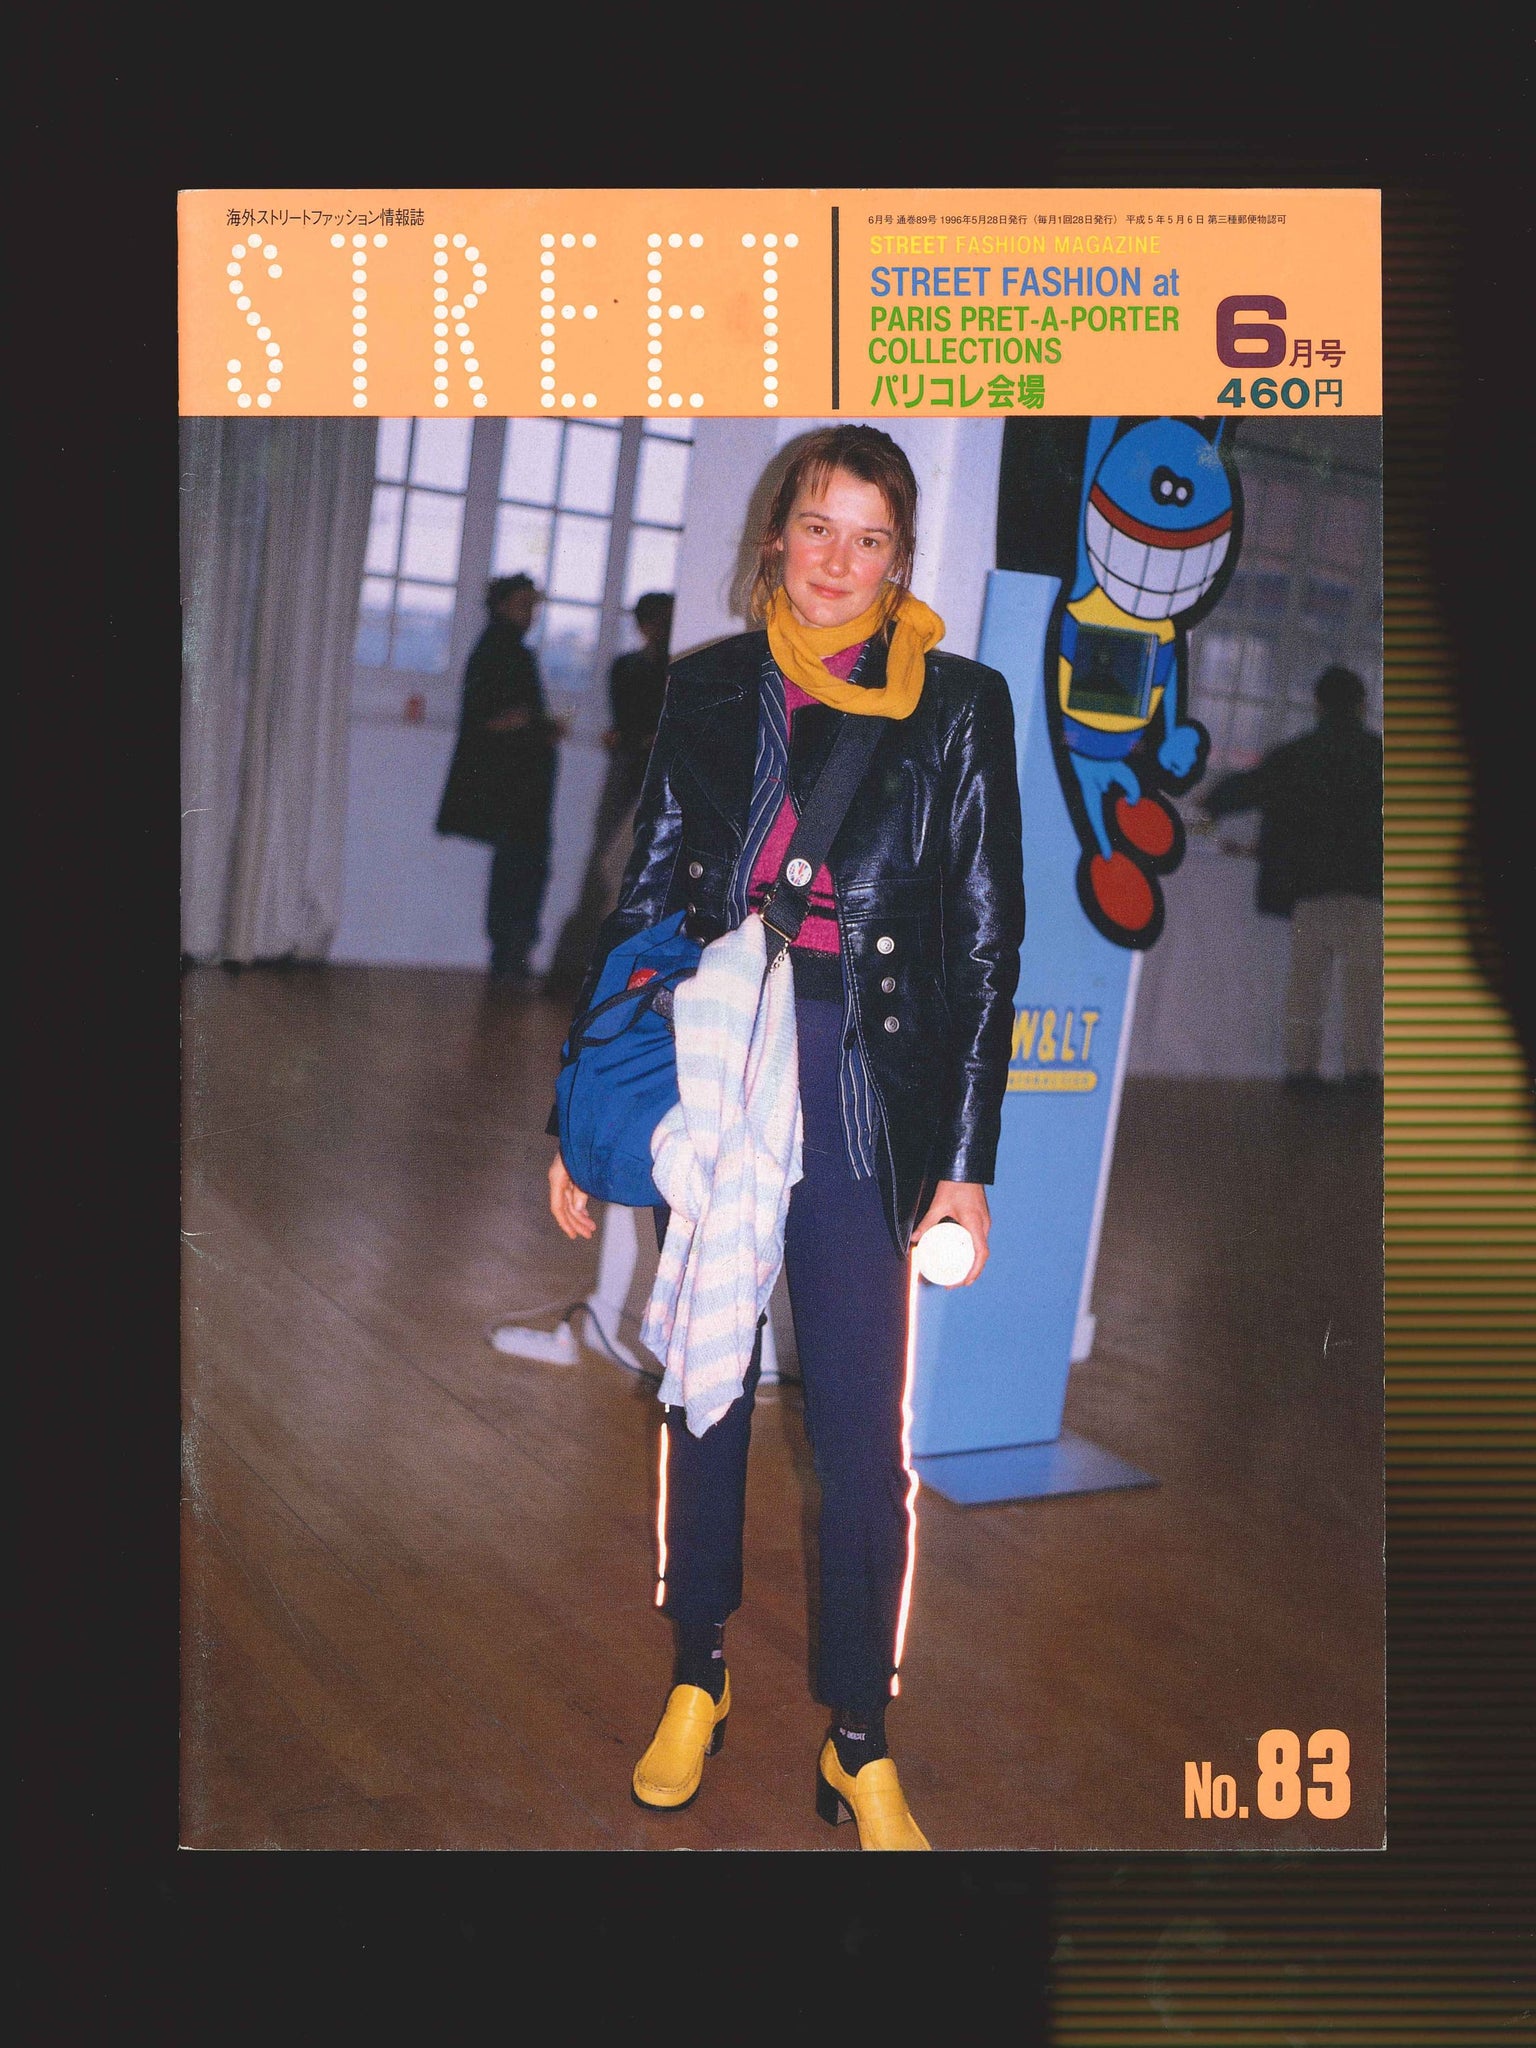 STREET magazine no. 83 / june 1996 / paris collections - Shoichi Aoki